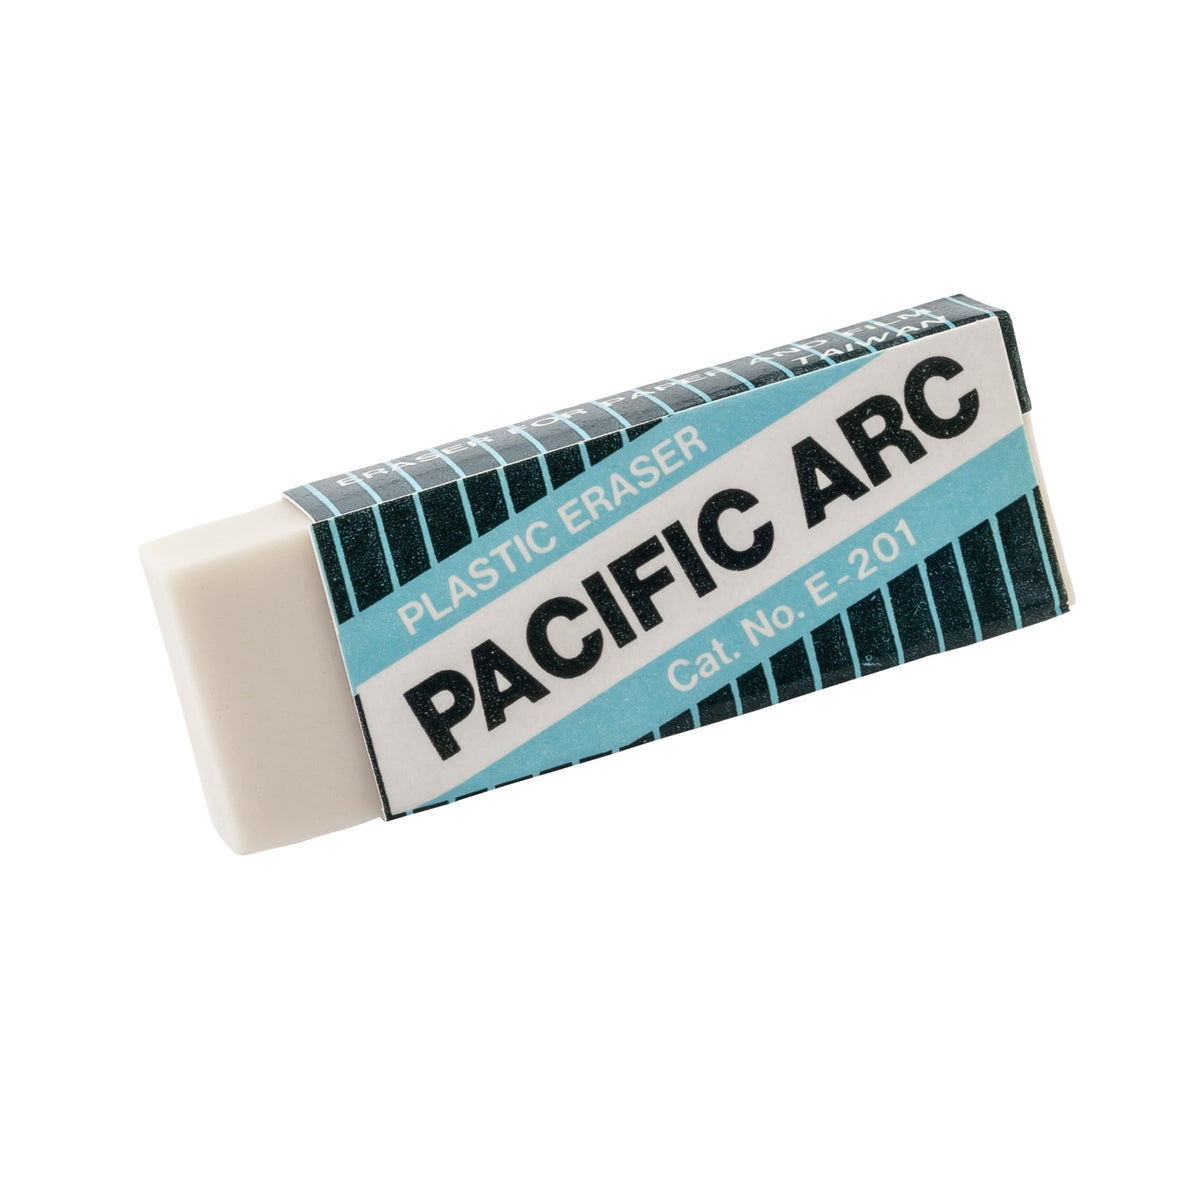 Pacific Arc Erasing Shield